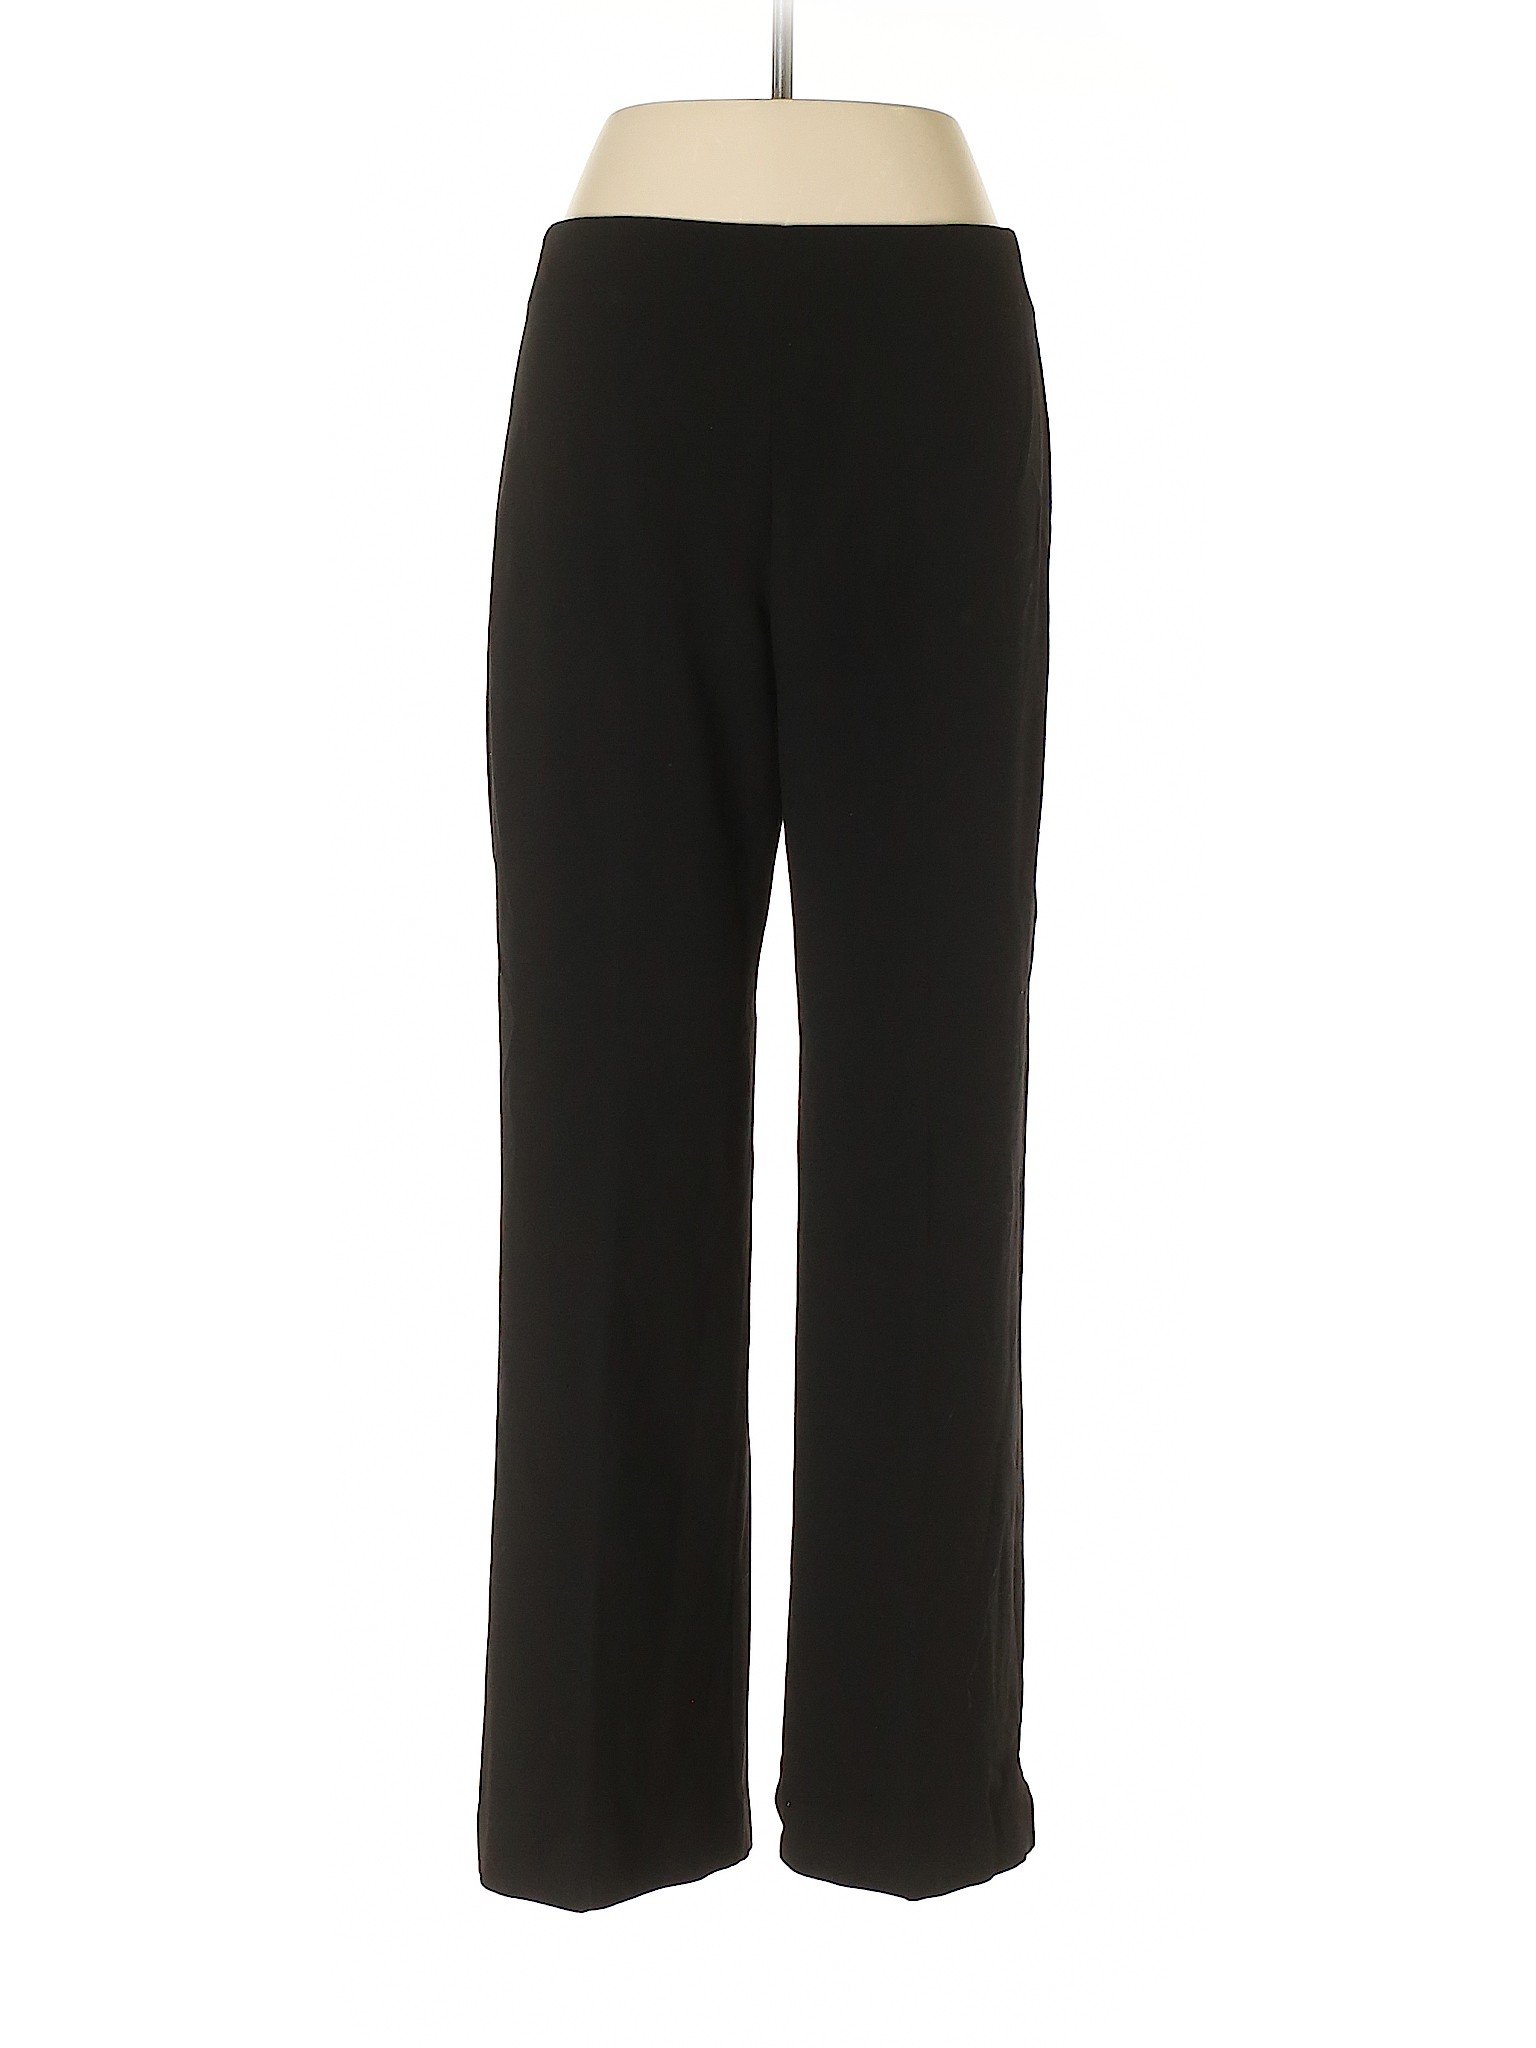 Frank Lyman Design Women Black Dress Pants 6 | eBay